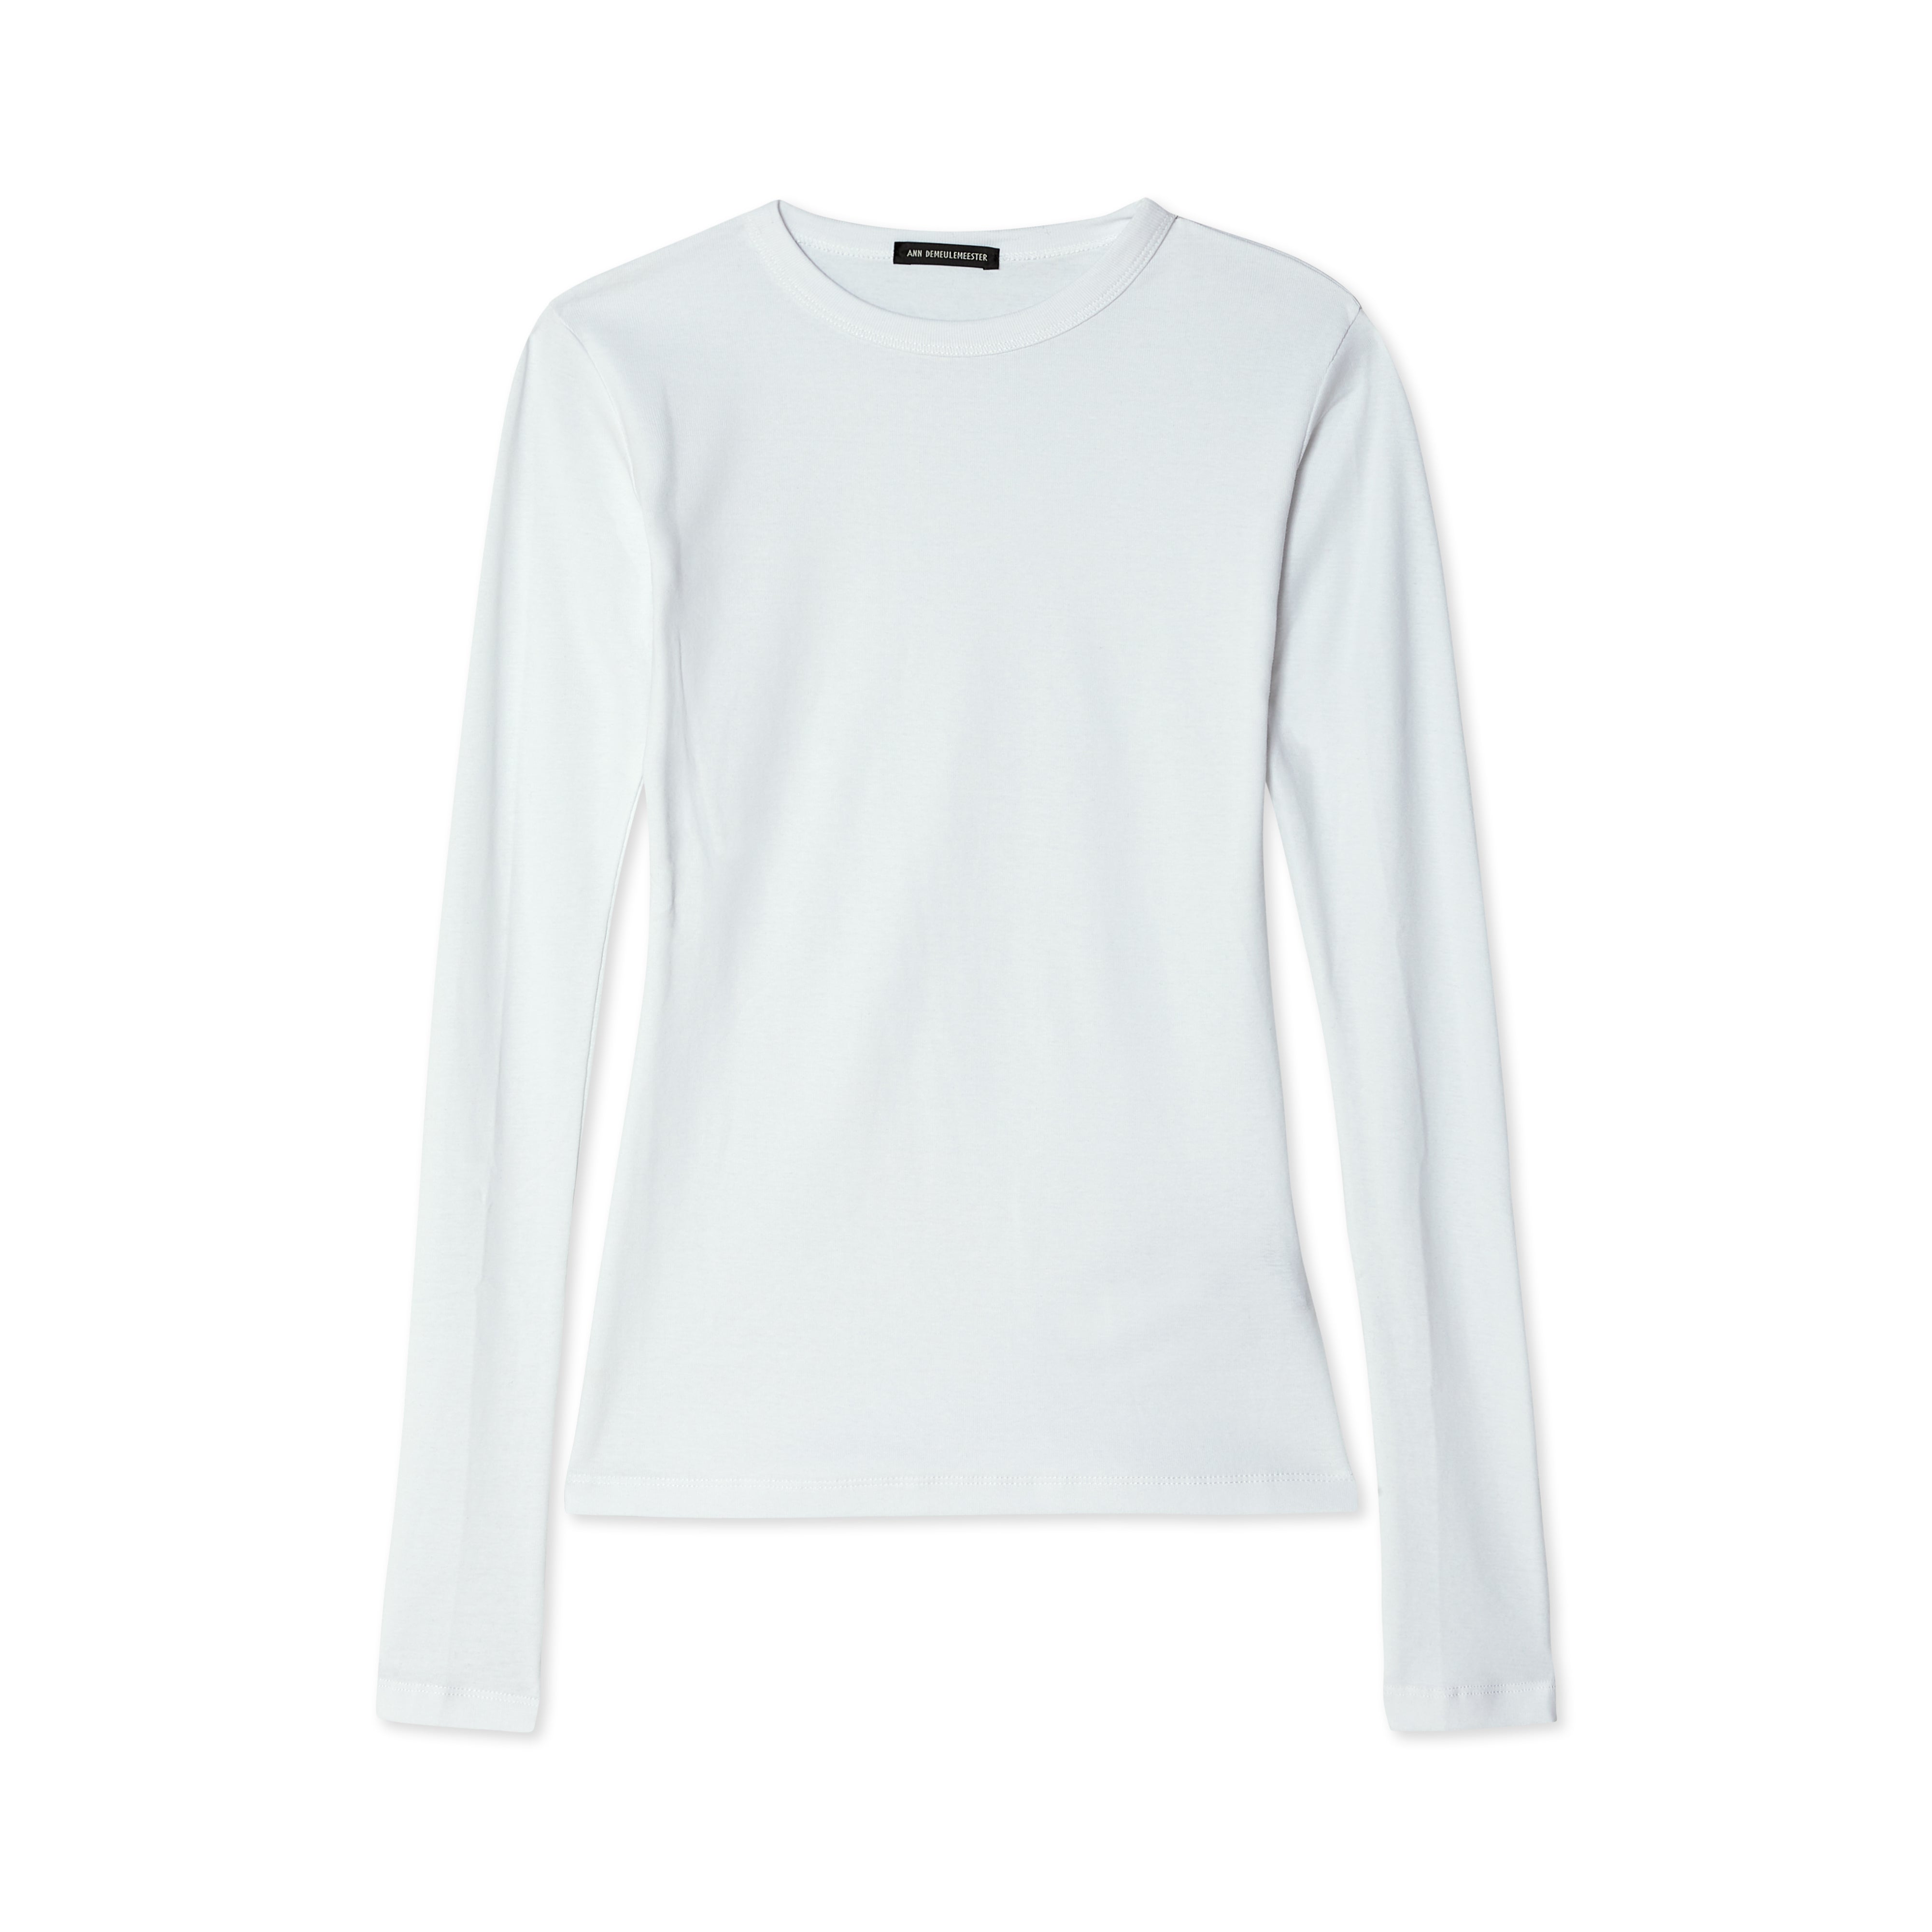 Ann Demeulemeester - Women's Fanie Long Sleeve T-Shirt - (White